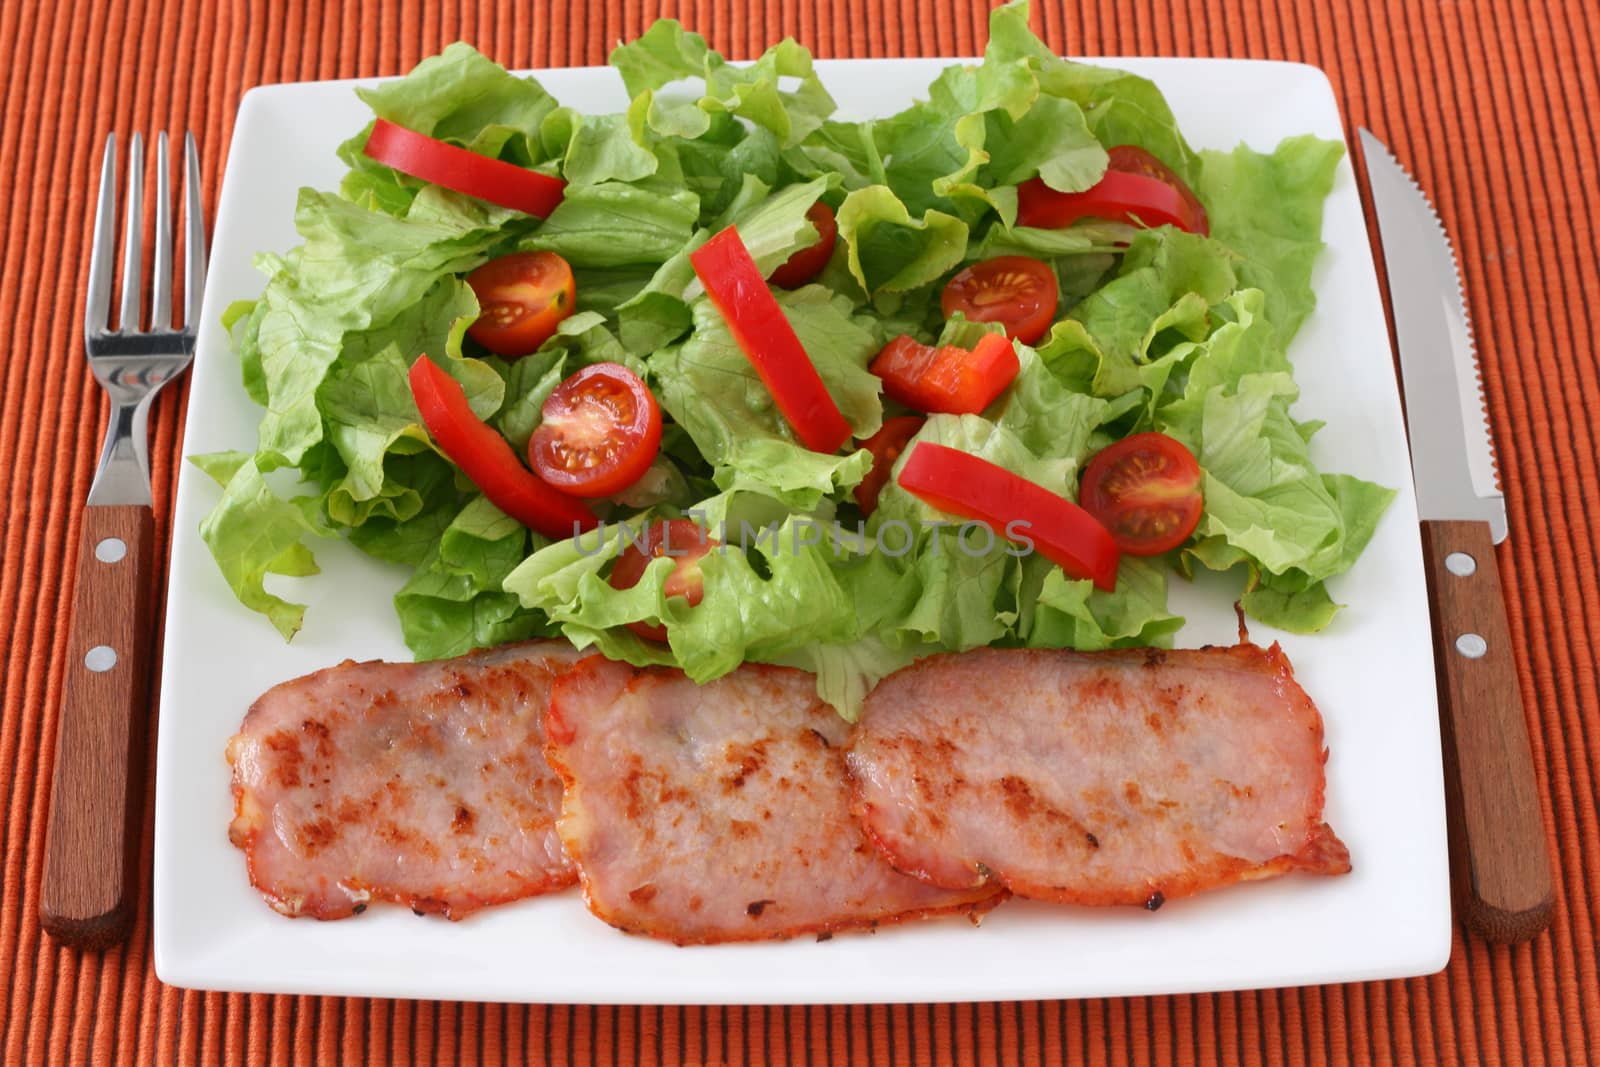 fried meat with salad by nataliamylova